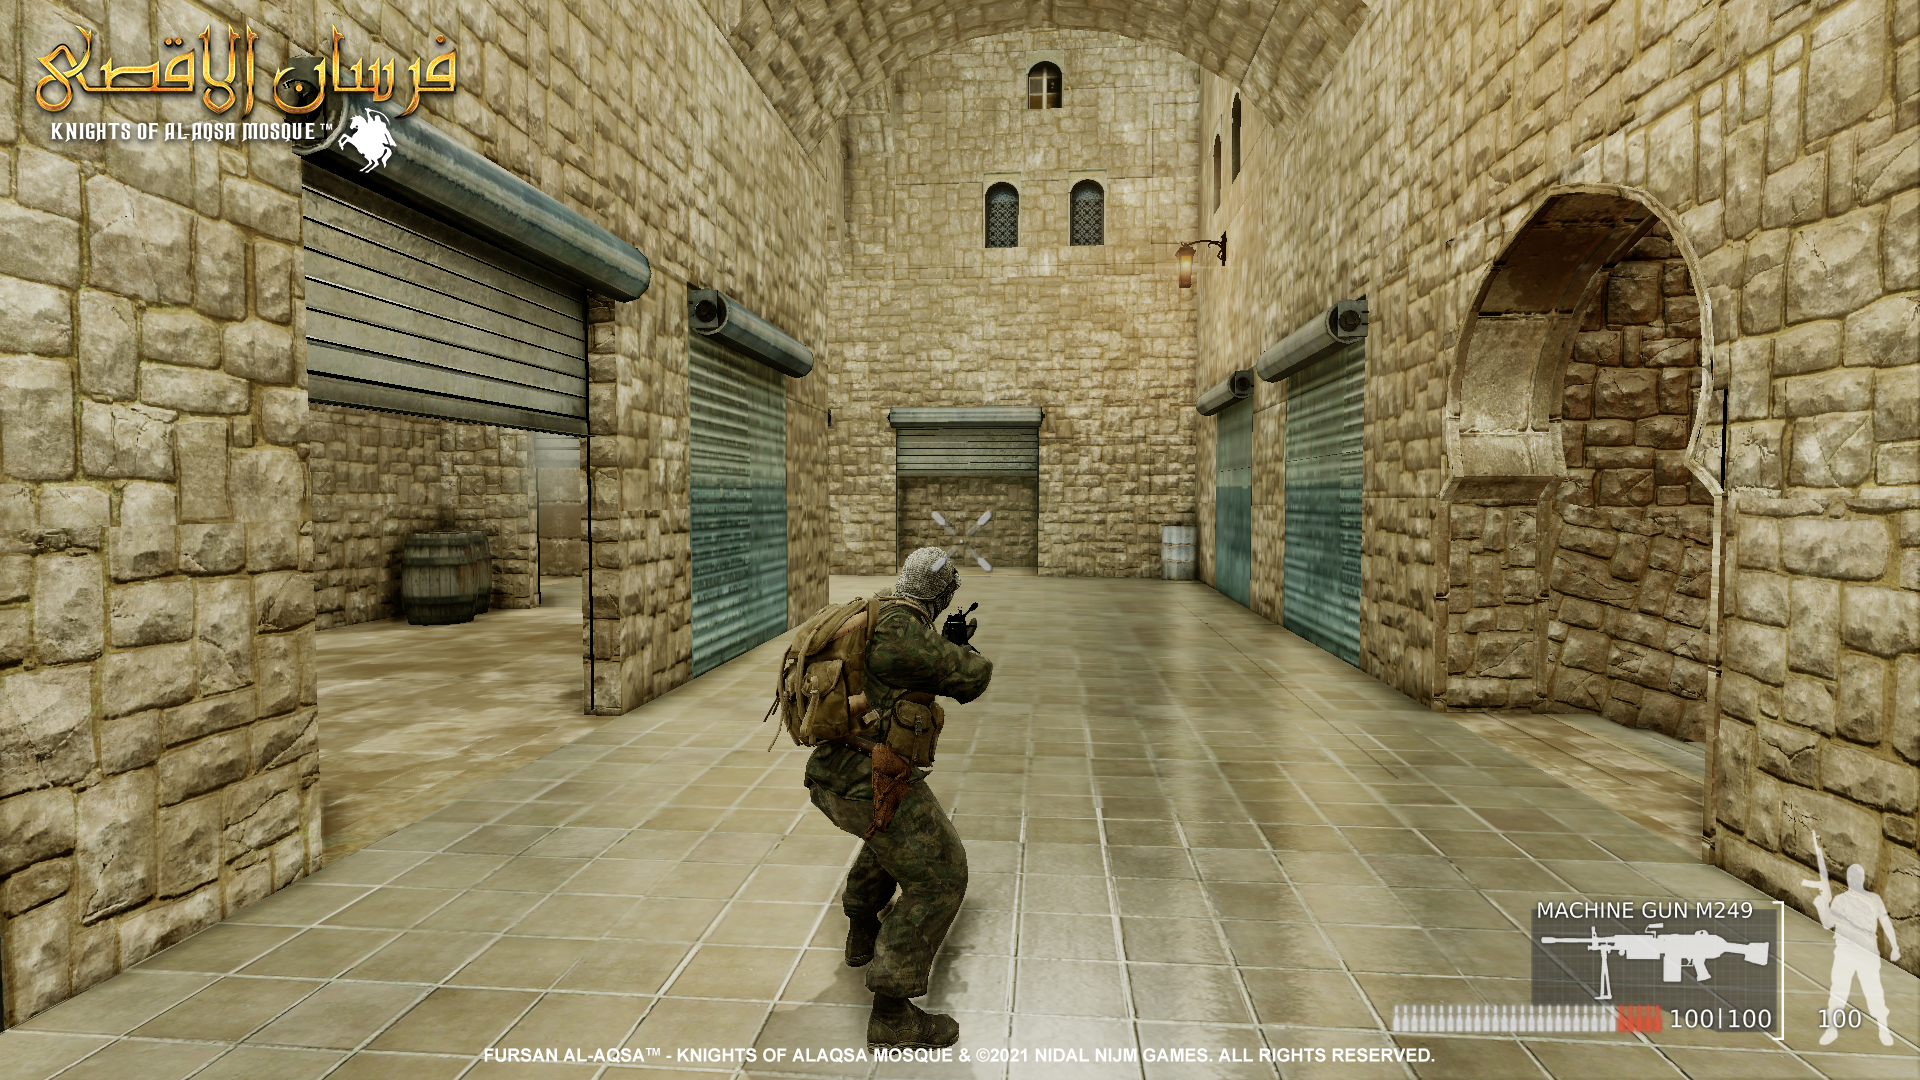 Fursan alAqsa  Showcase Jerusalem 9 1 - I am developing a game about Palestine Resistance